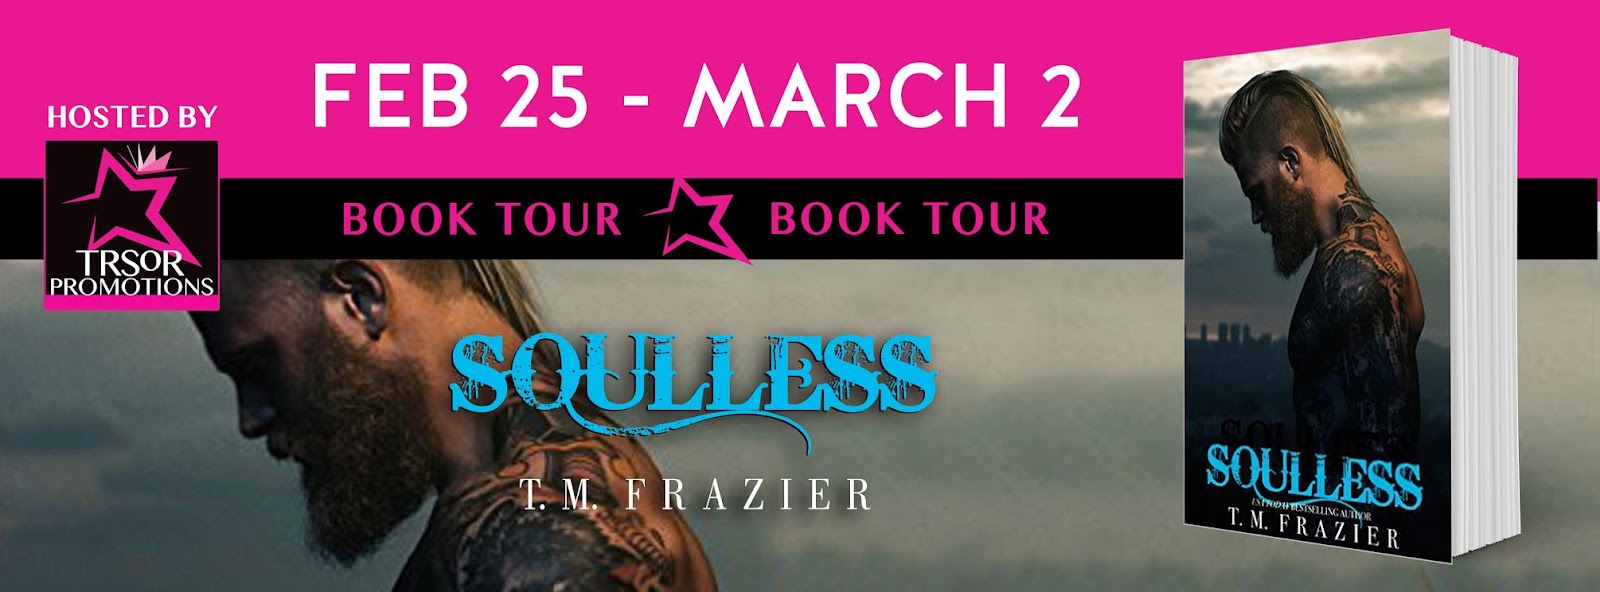 soulless book tour.jpg